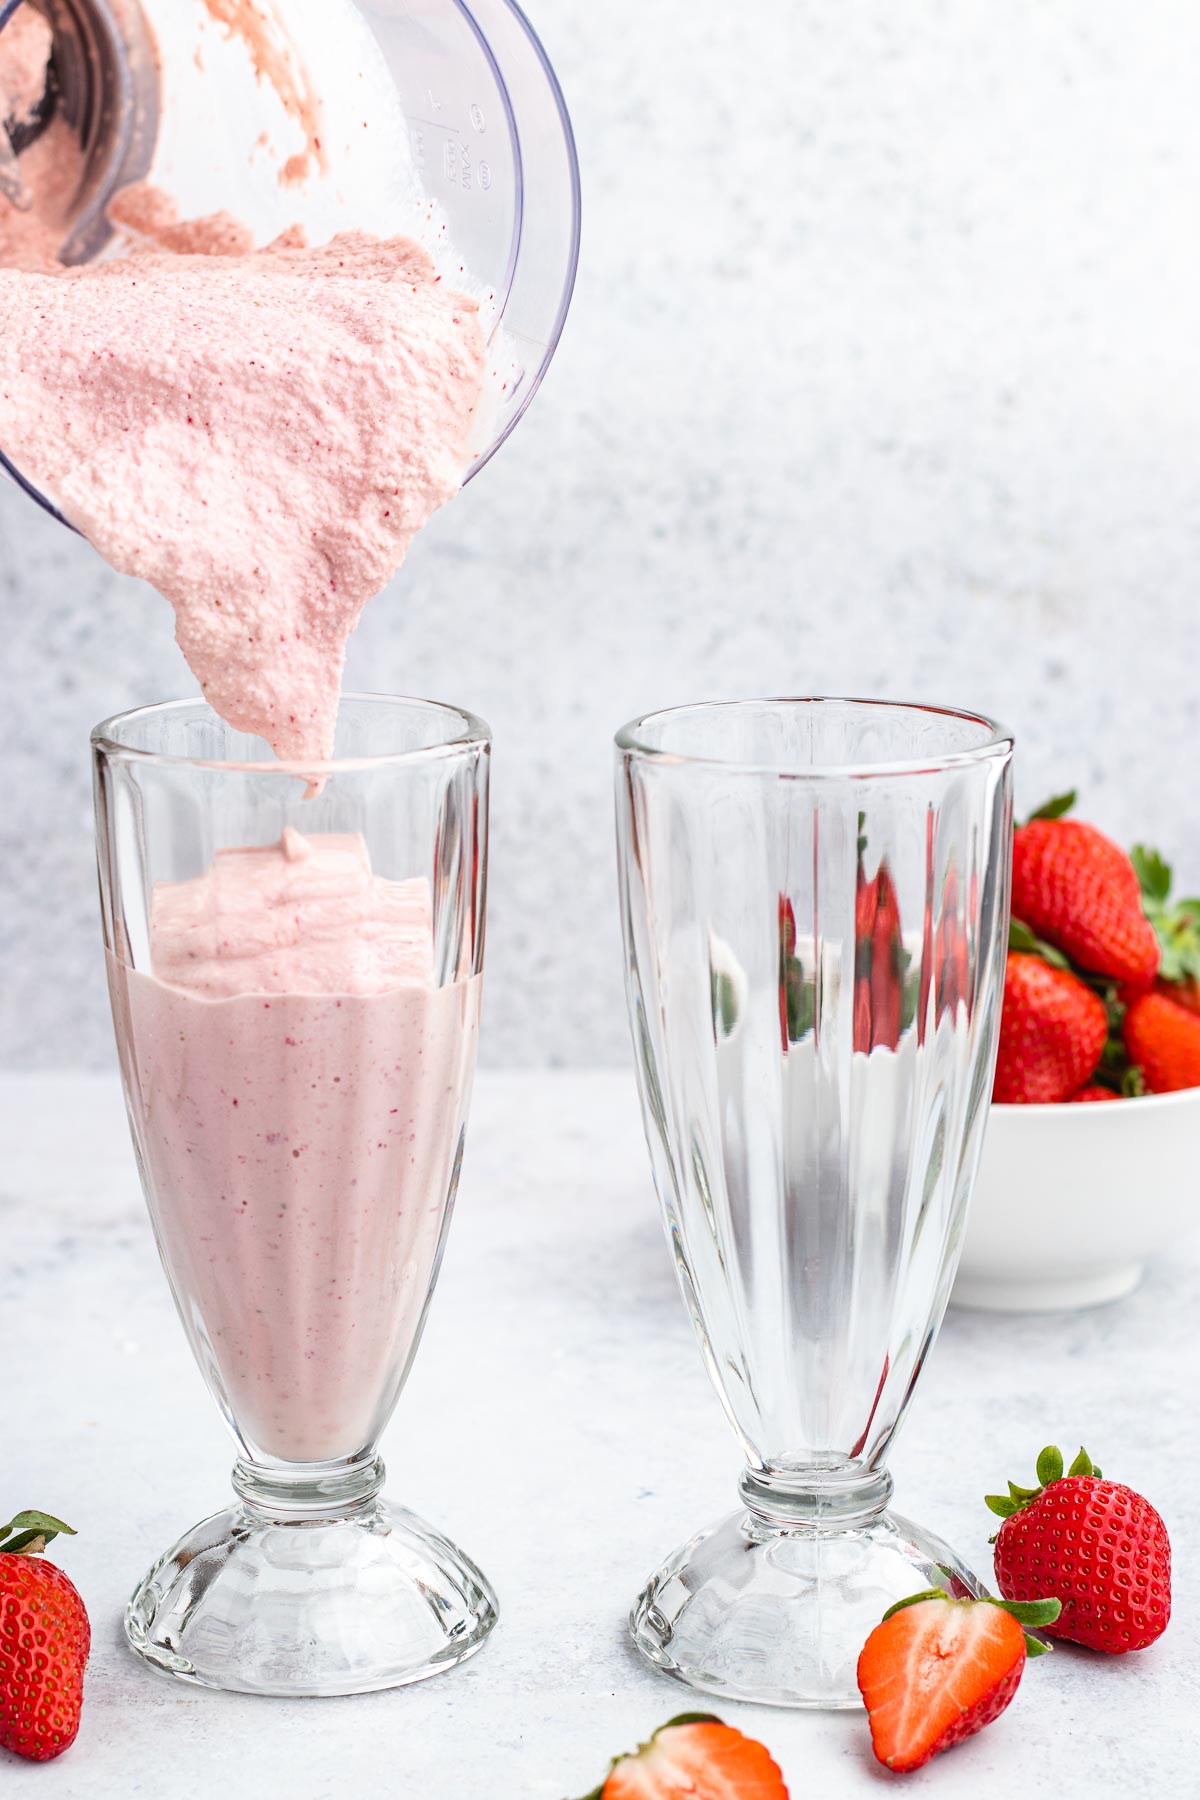 Strawberry Milkshake being poured in glasses